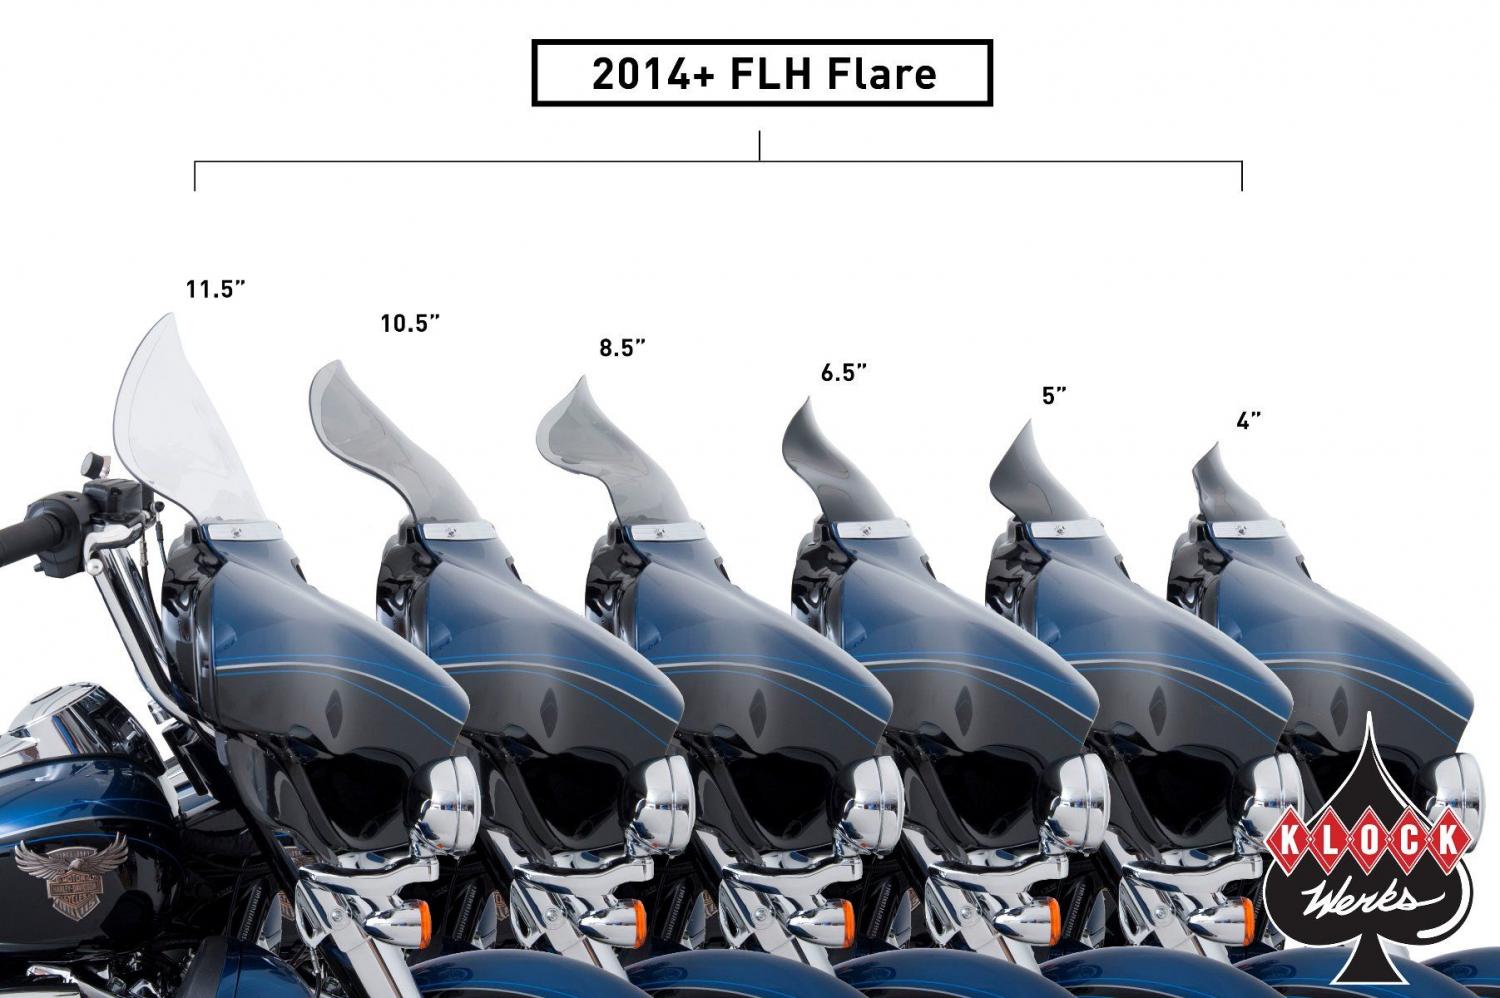 Klock Werks Flare Windshield for 14-UP Harley FLH